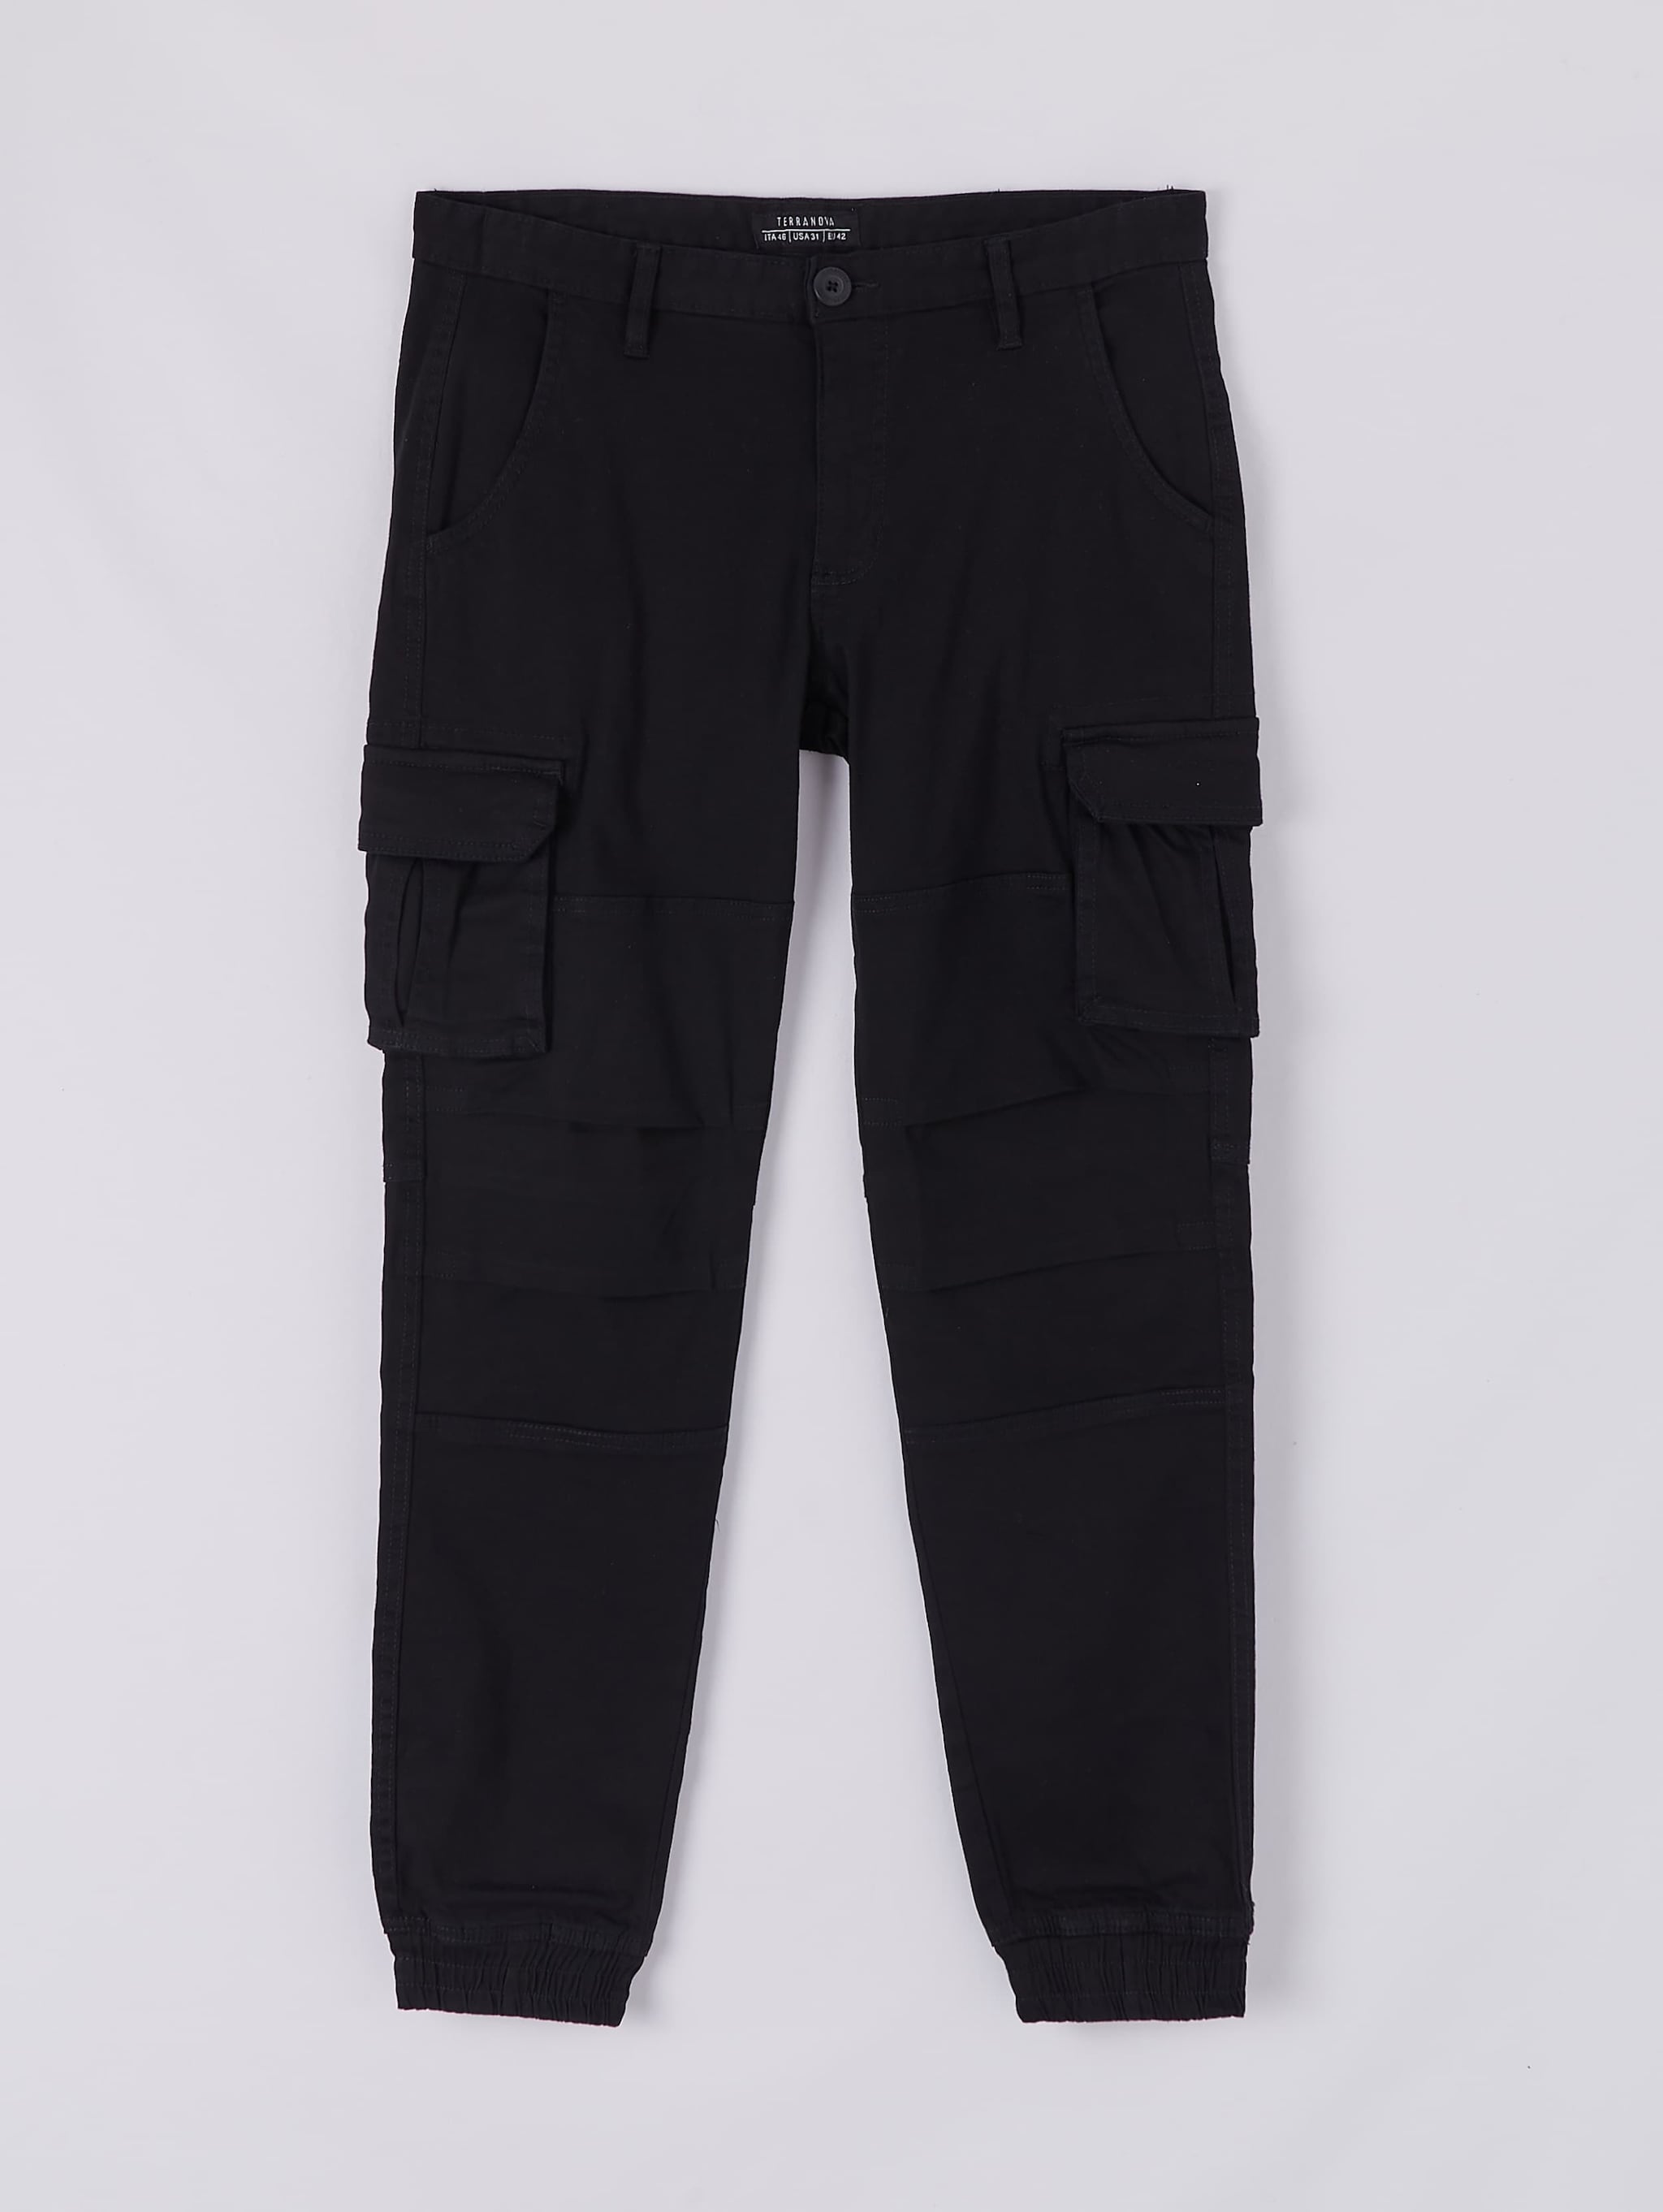 long black cargo pants